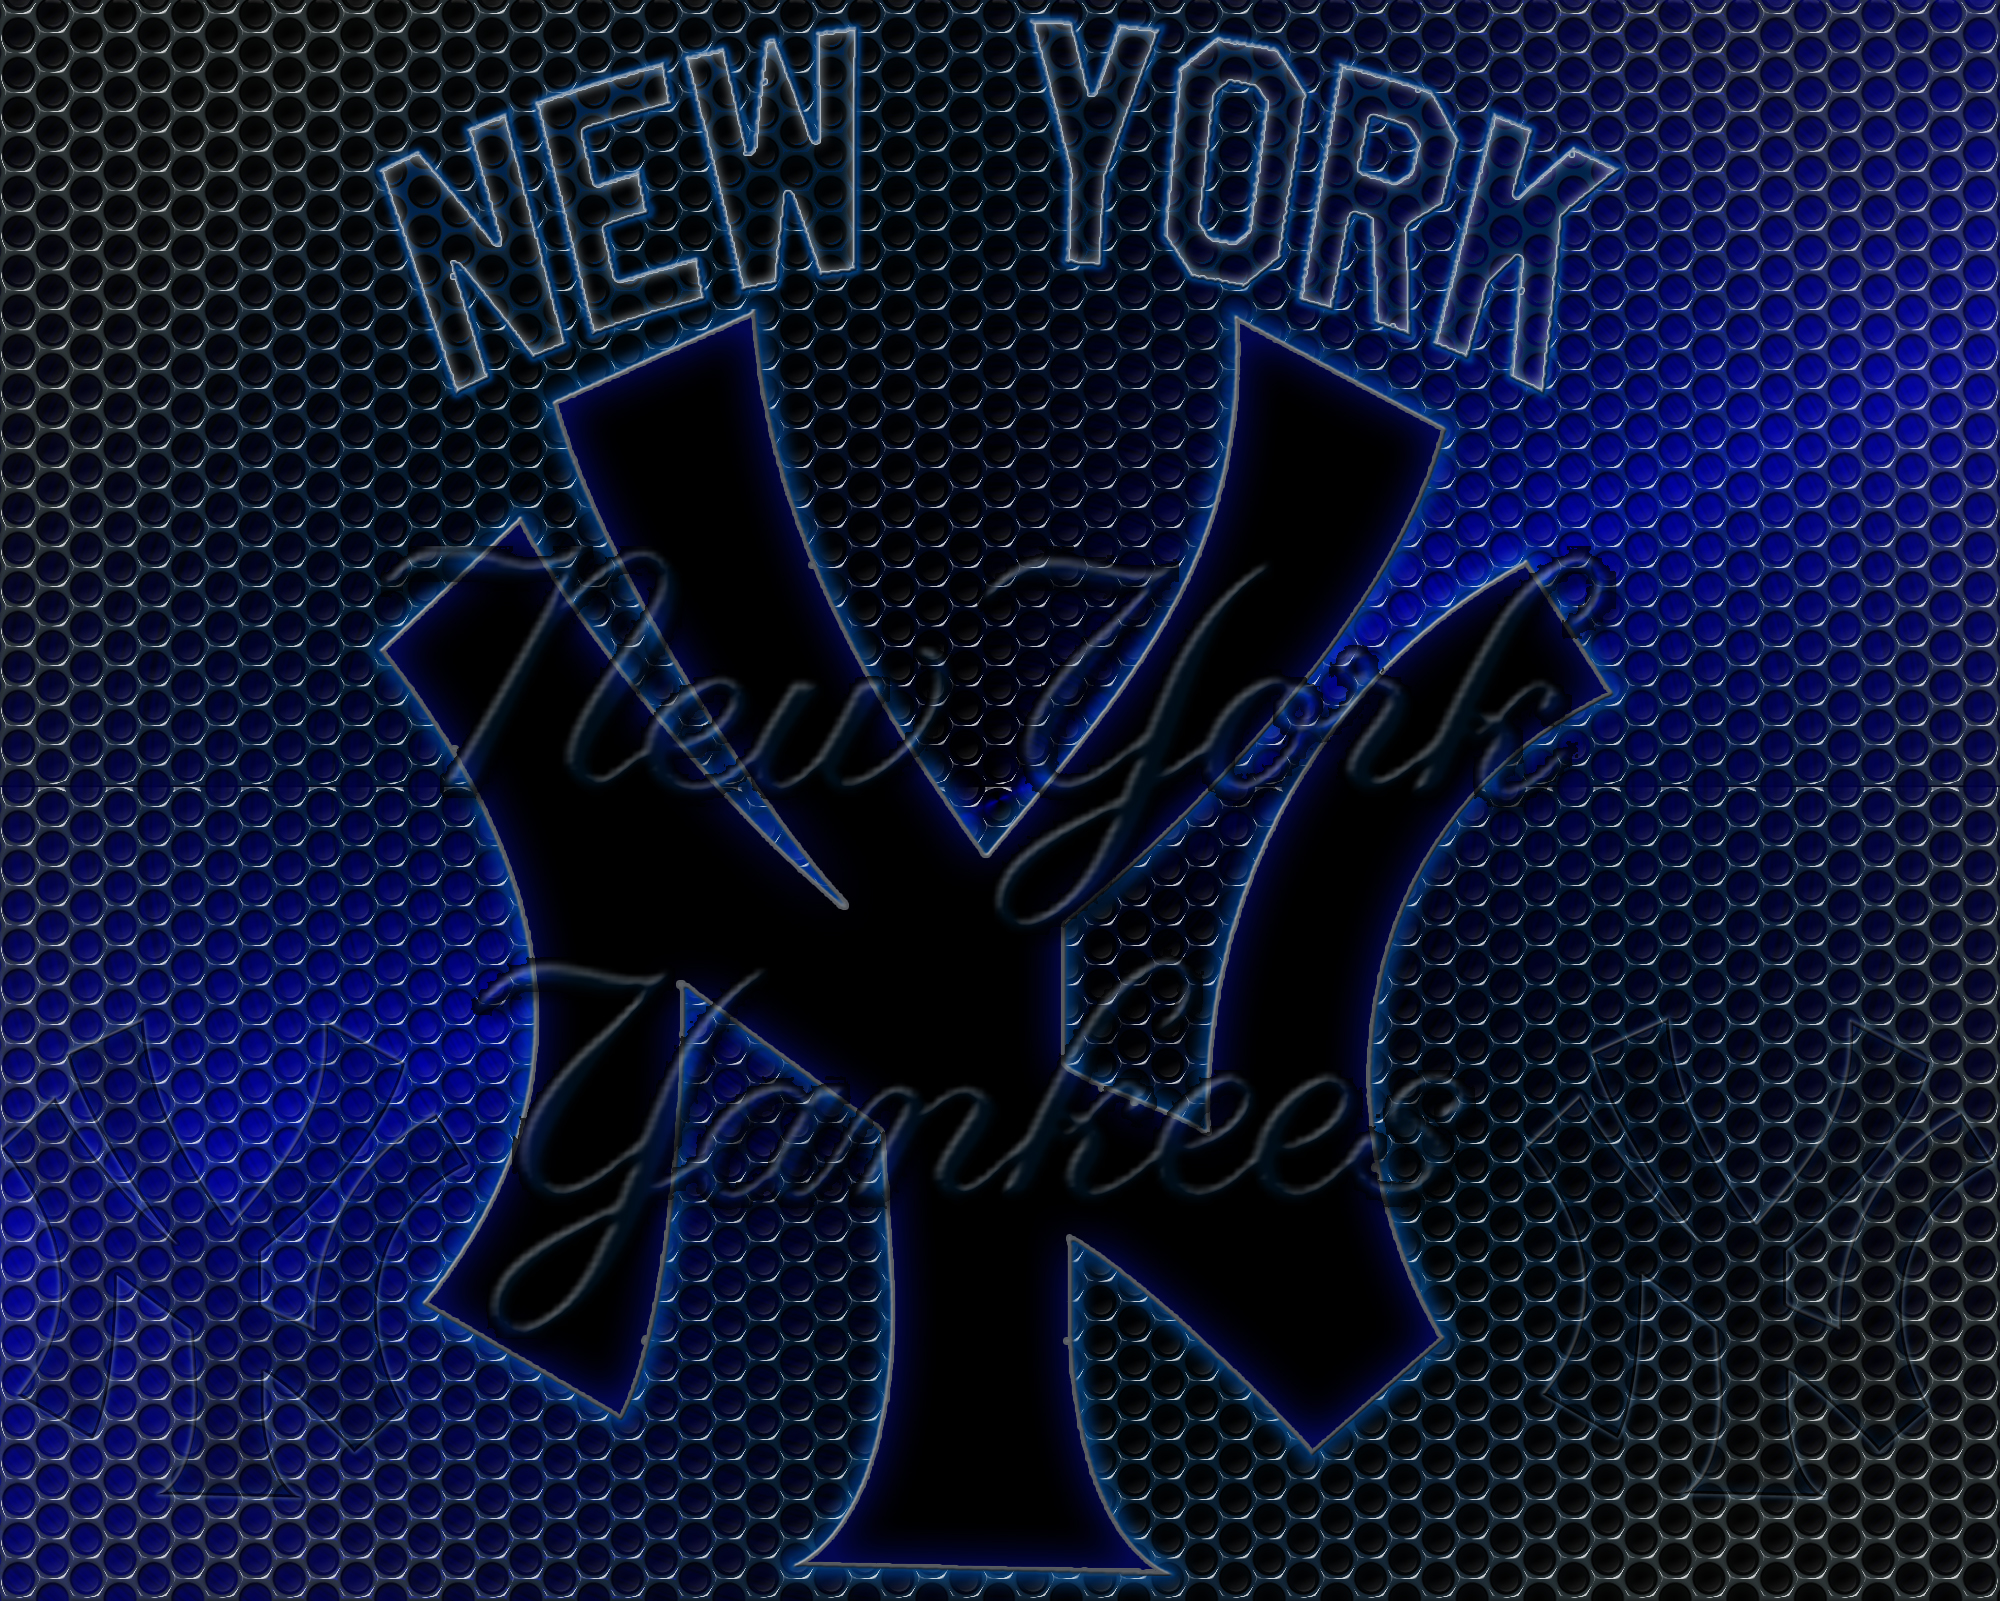 New York Yankees Logo Grid Wallpaper